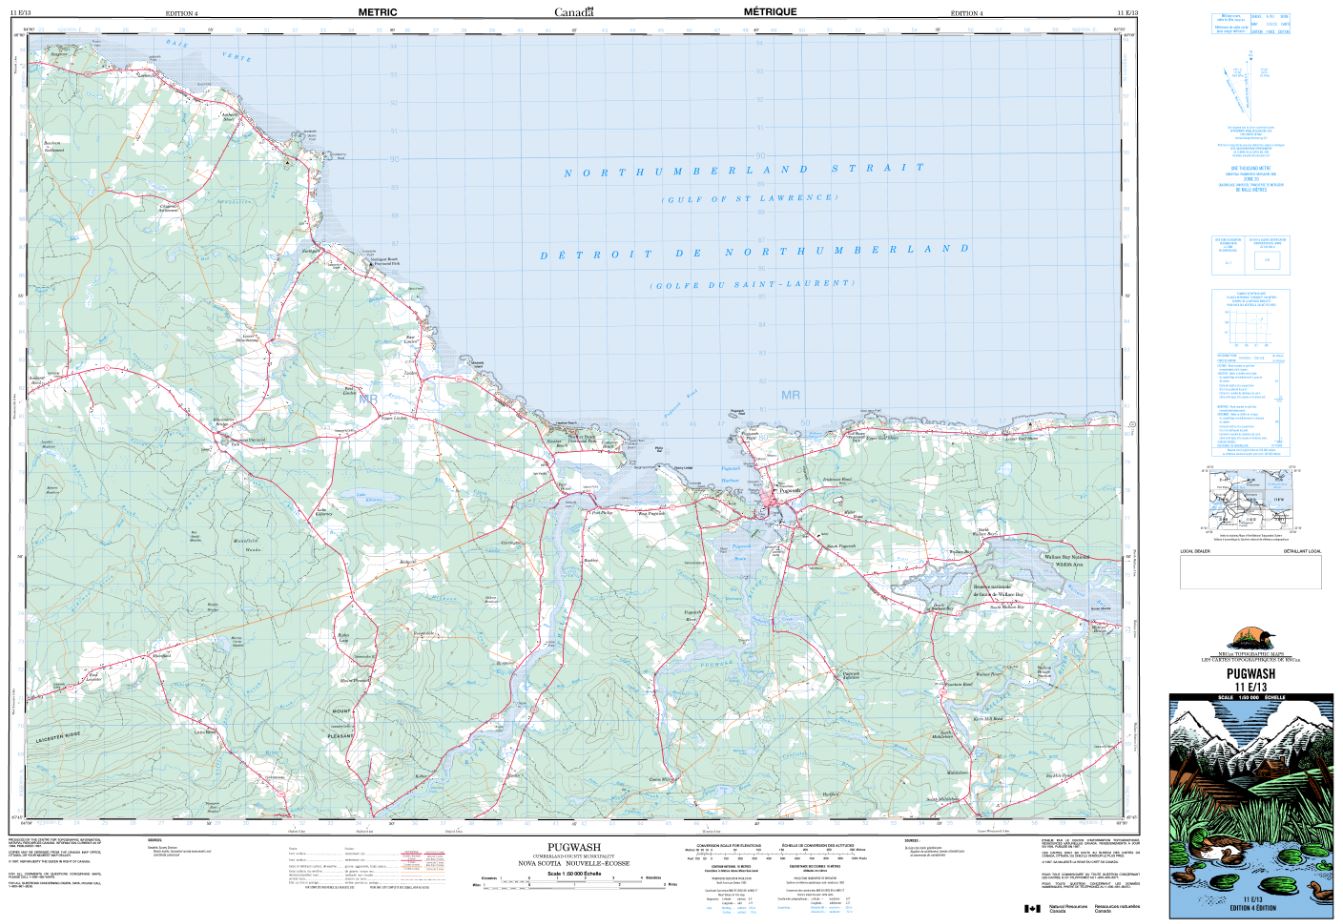 11E/13 Pugwash Topographic Map Nova Scotia